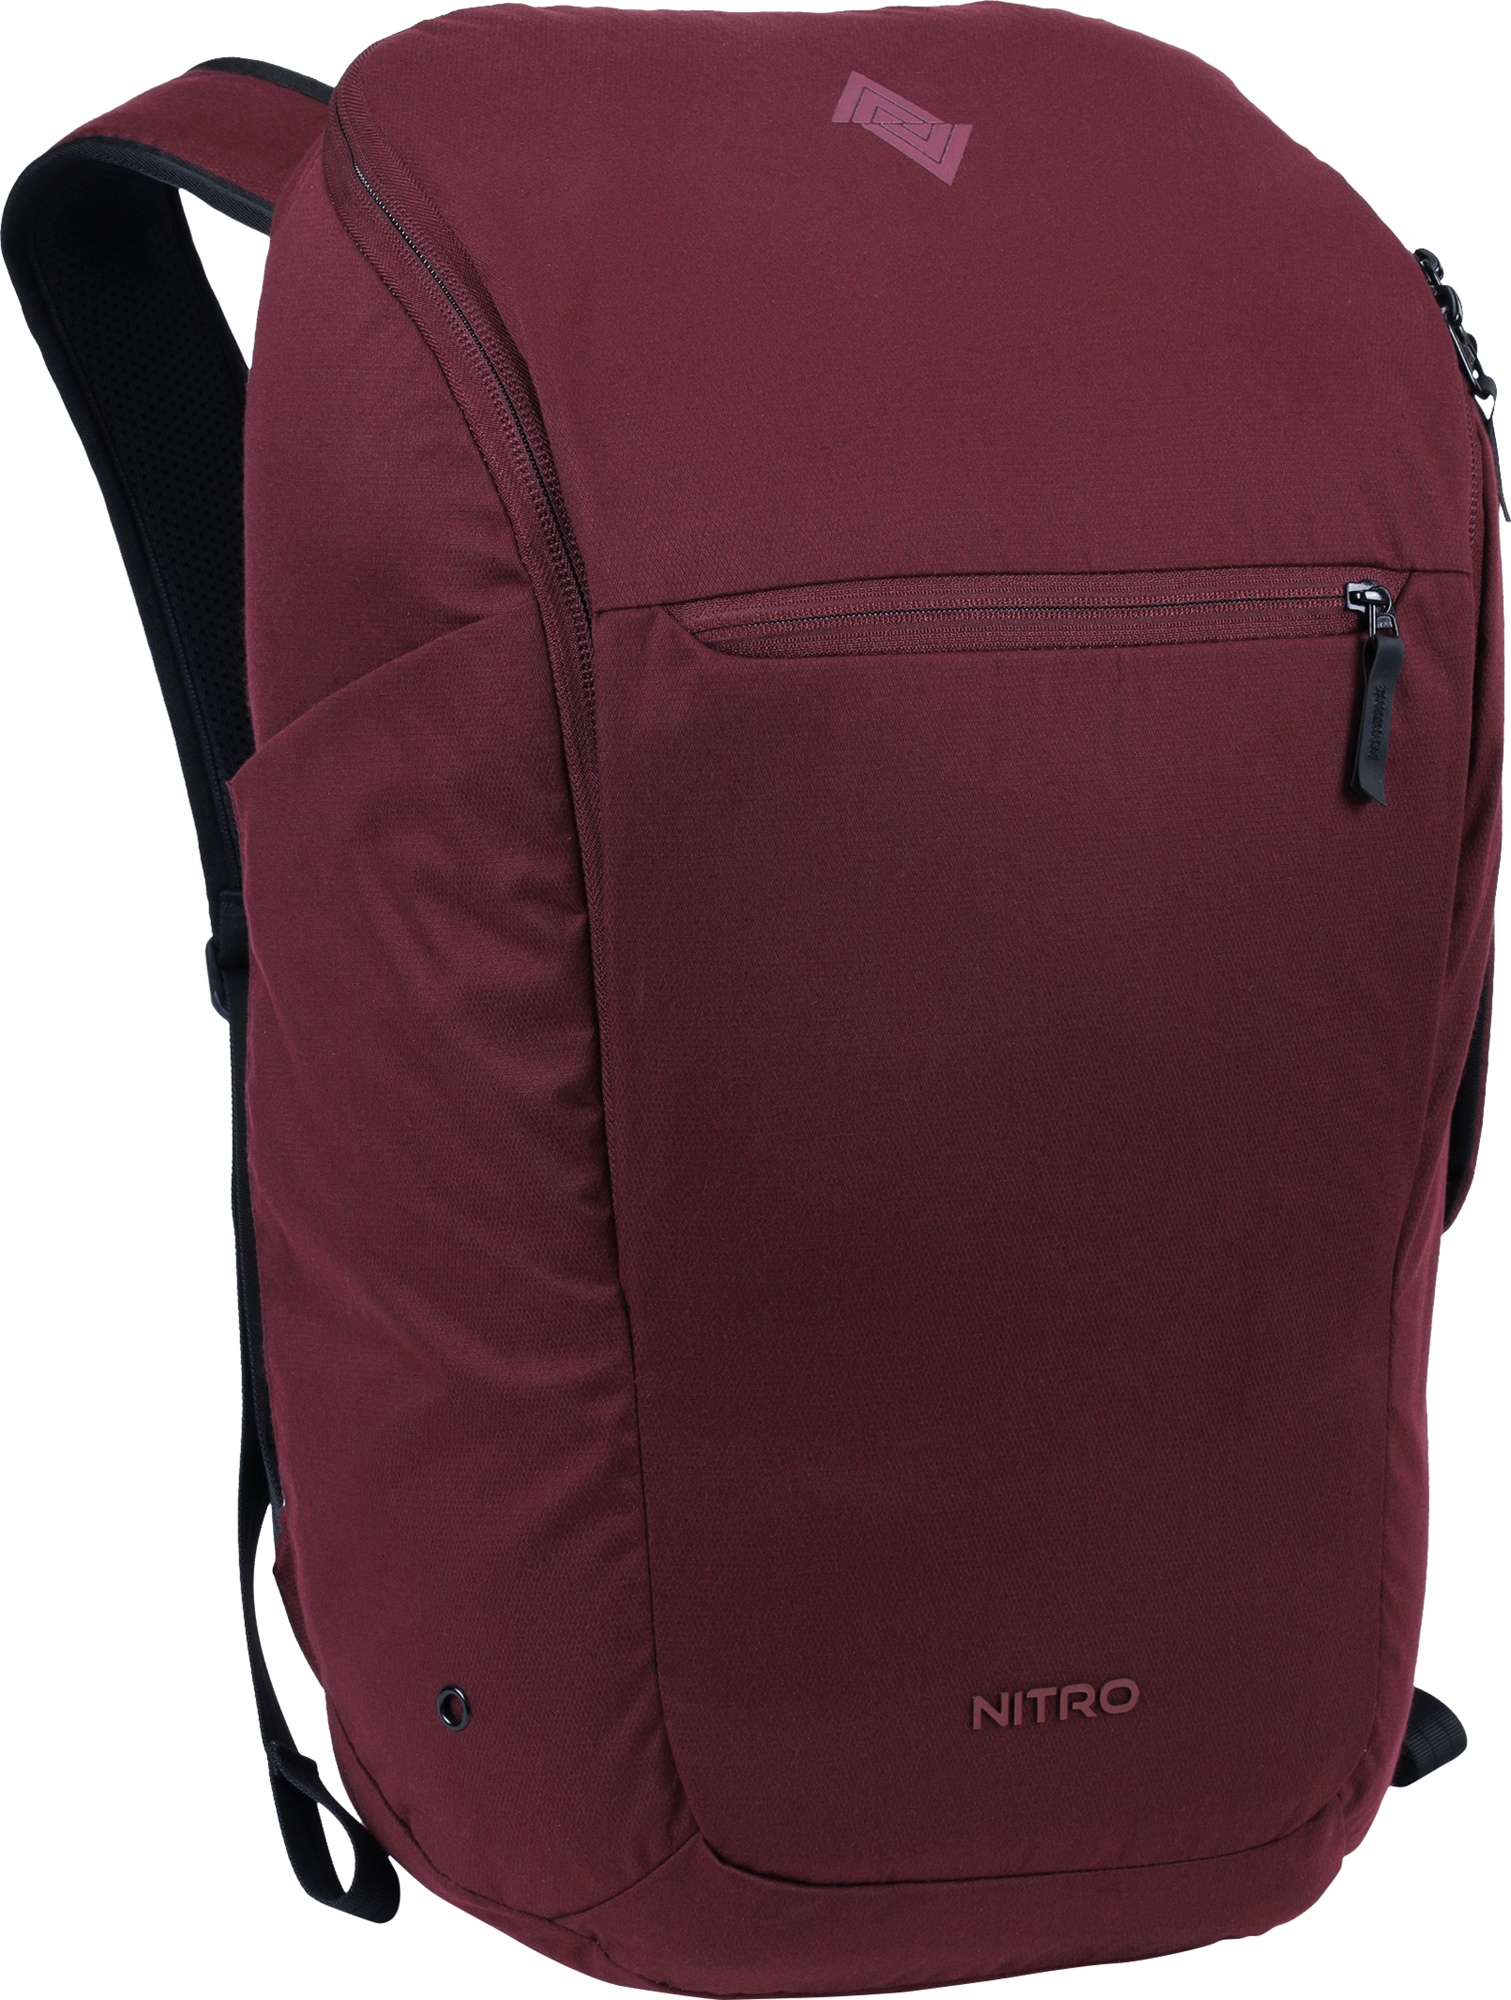 Freizeitrucksack »Nikuro Traveler«, Reisetasche, Travel Bag, Alltagsrucksack, Daypack